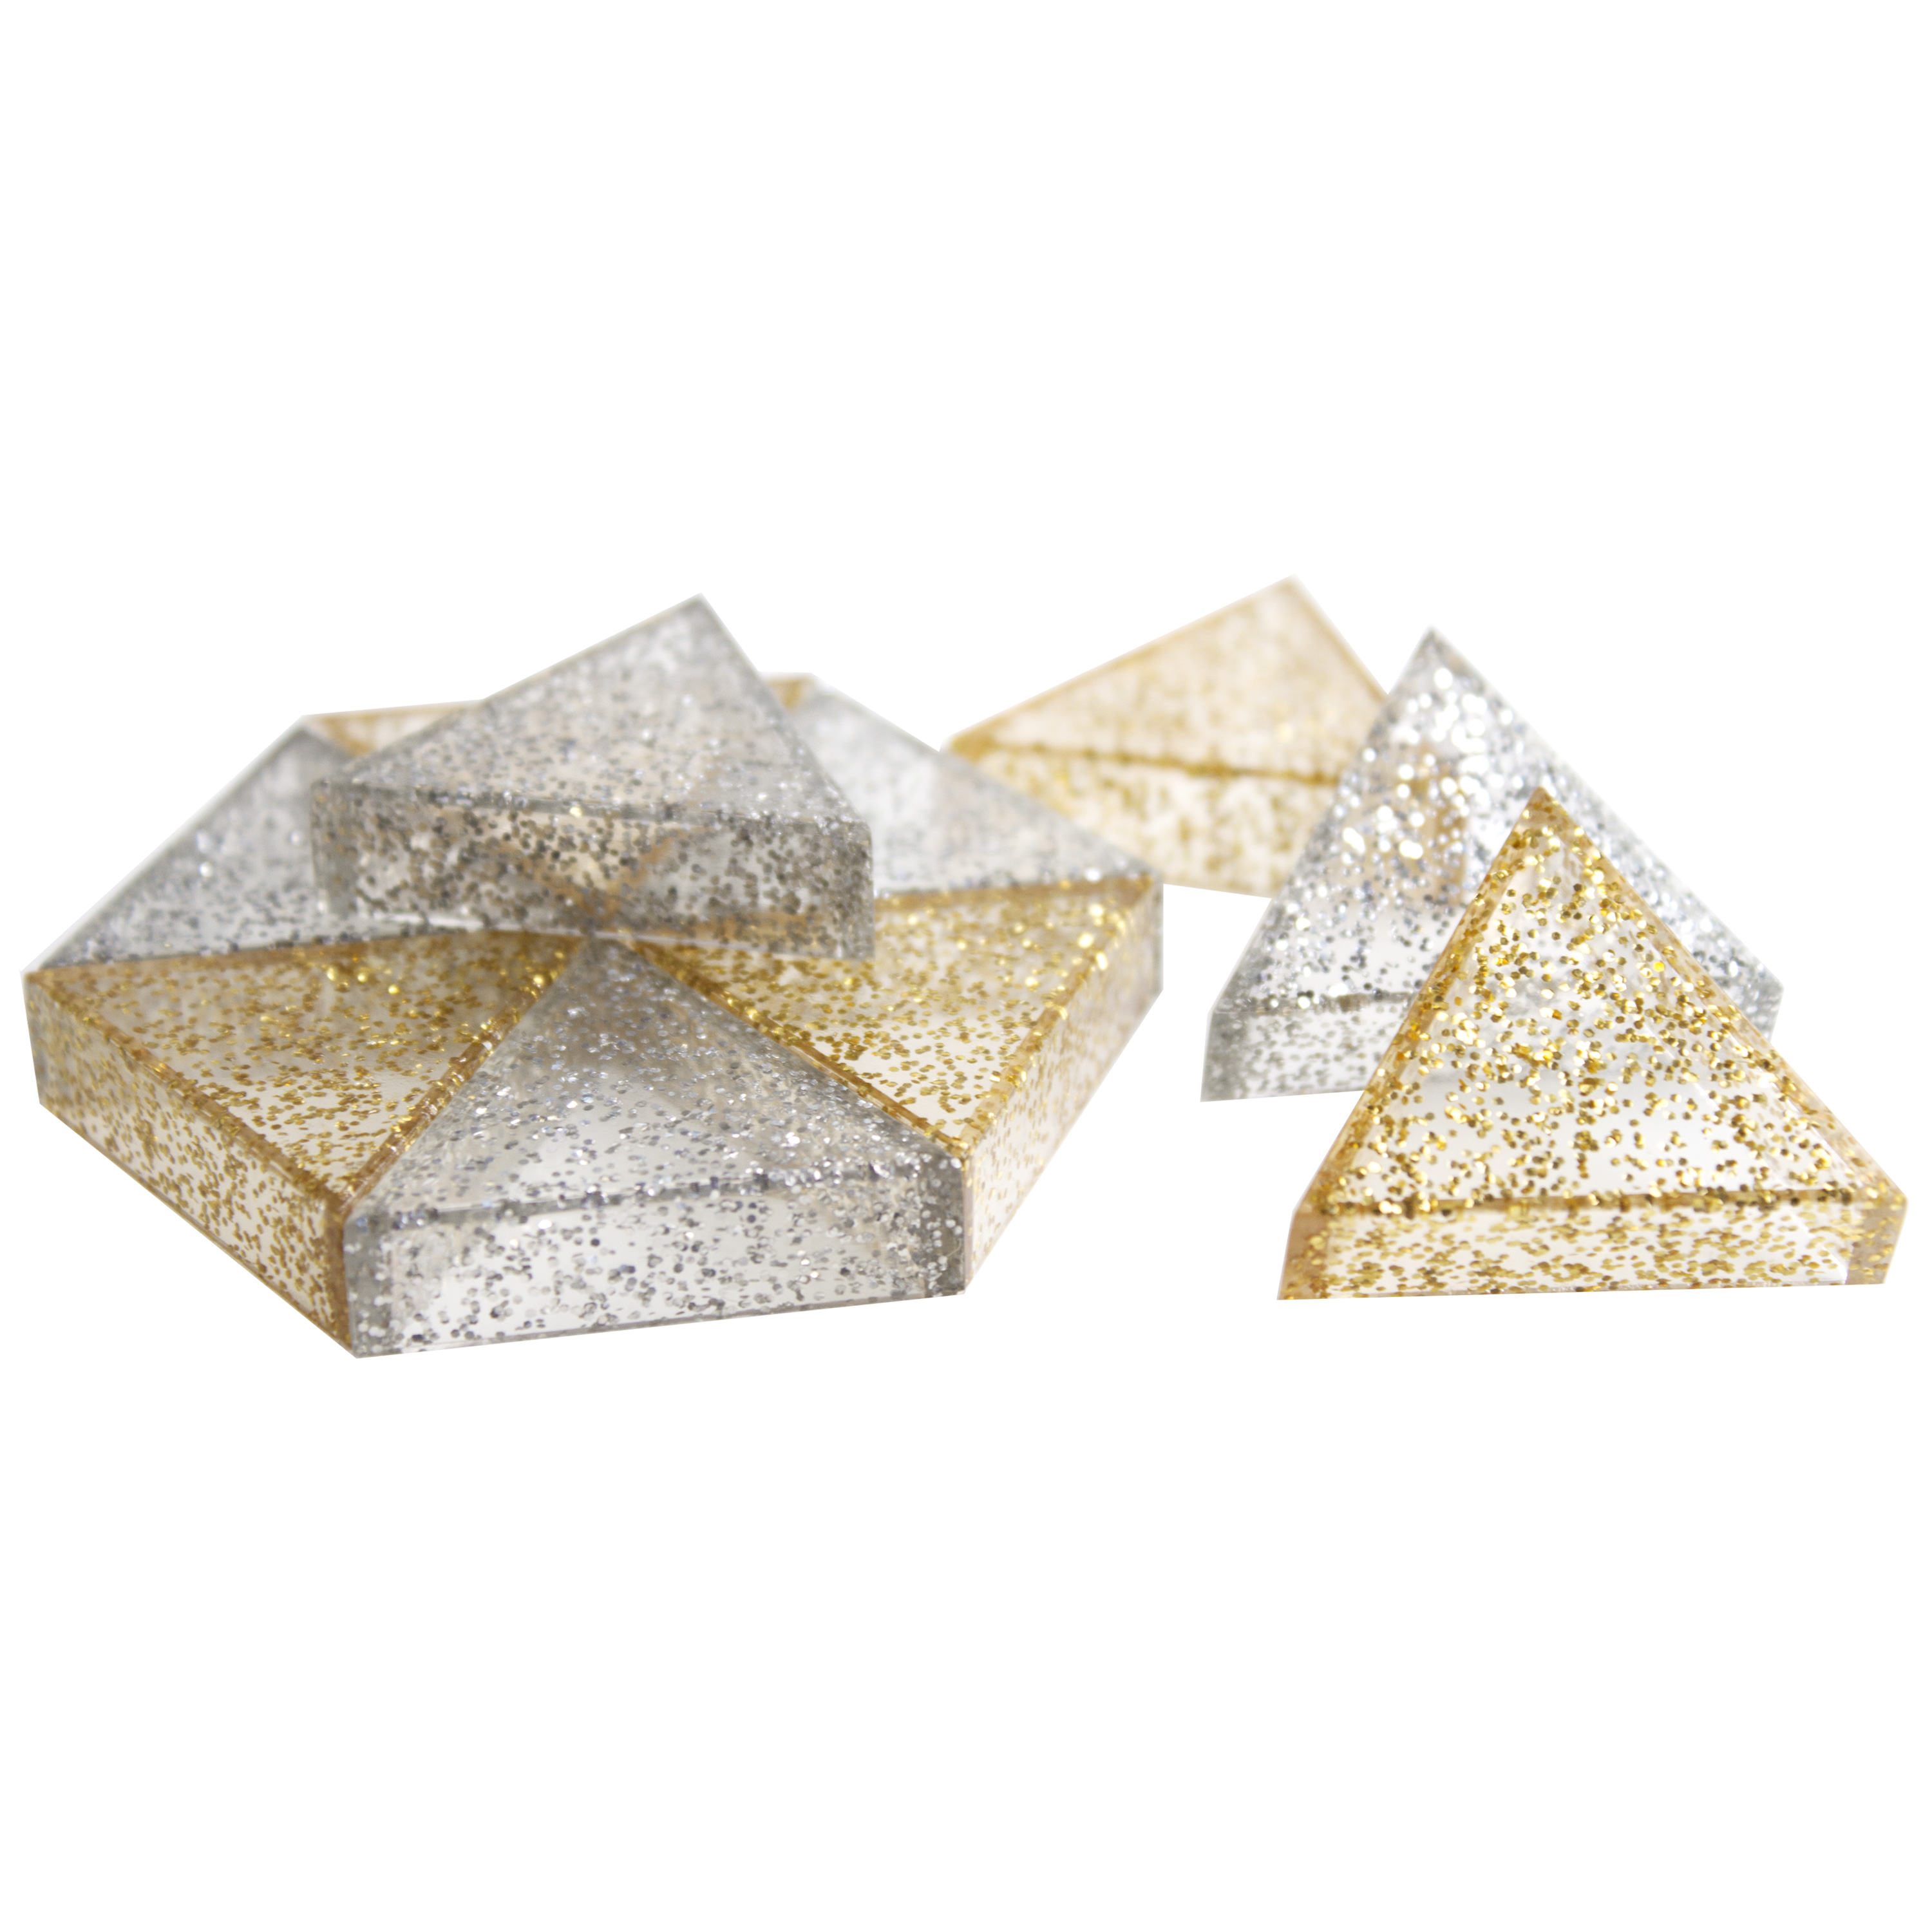 Ecko große Dreiecke 'gold/silber', 500 Teile